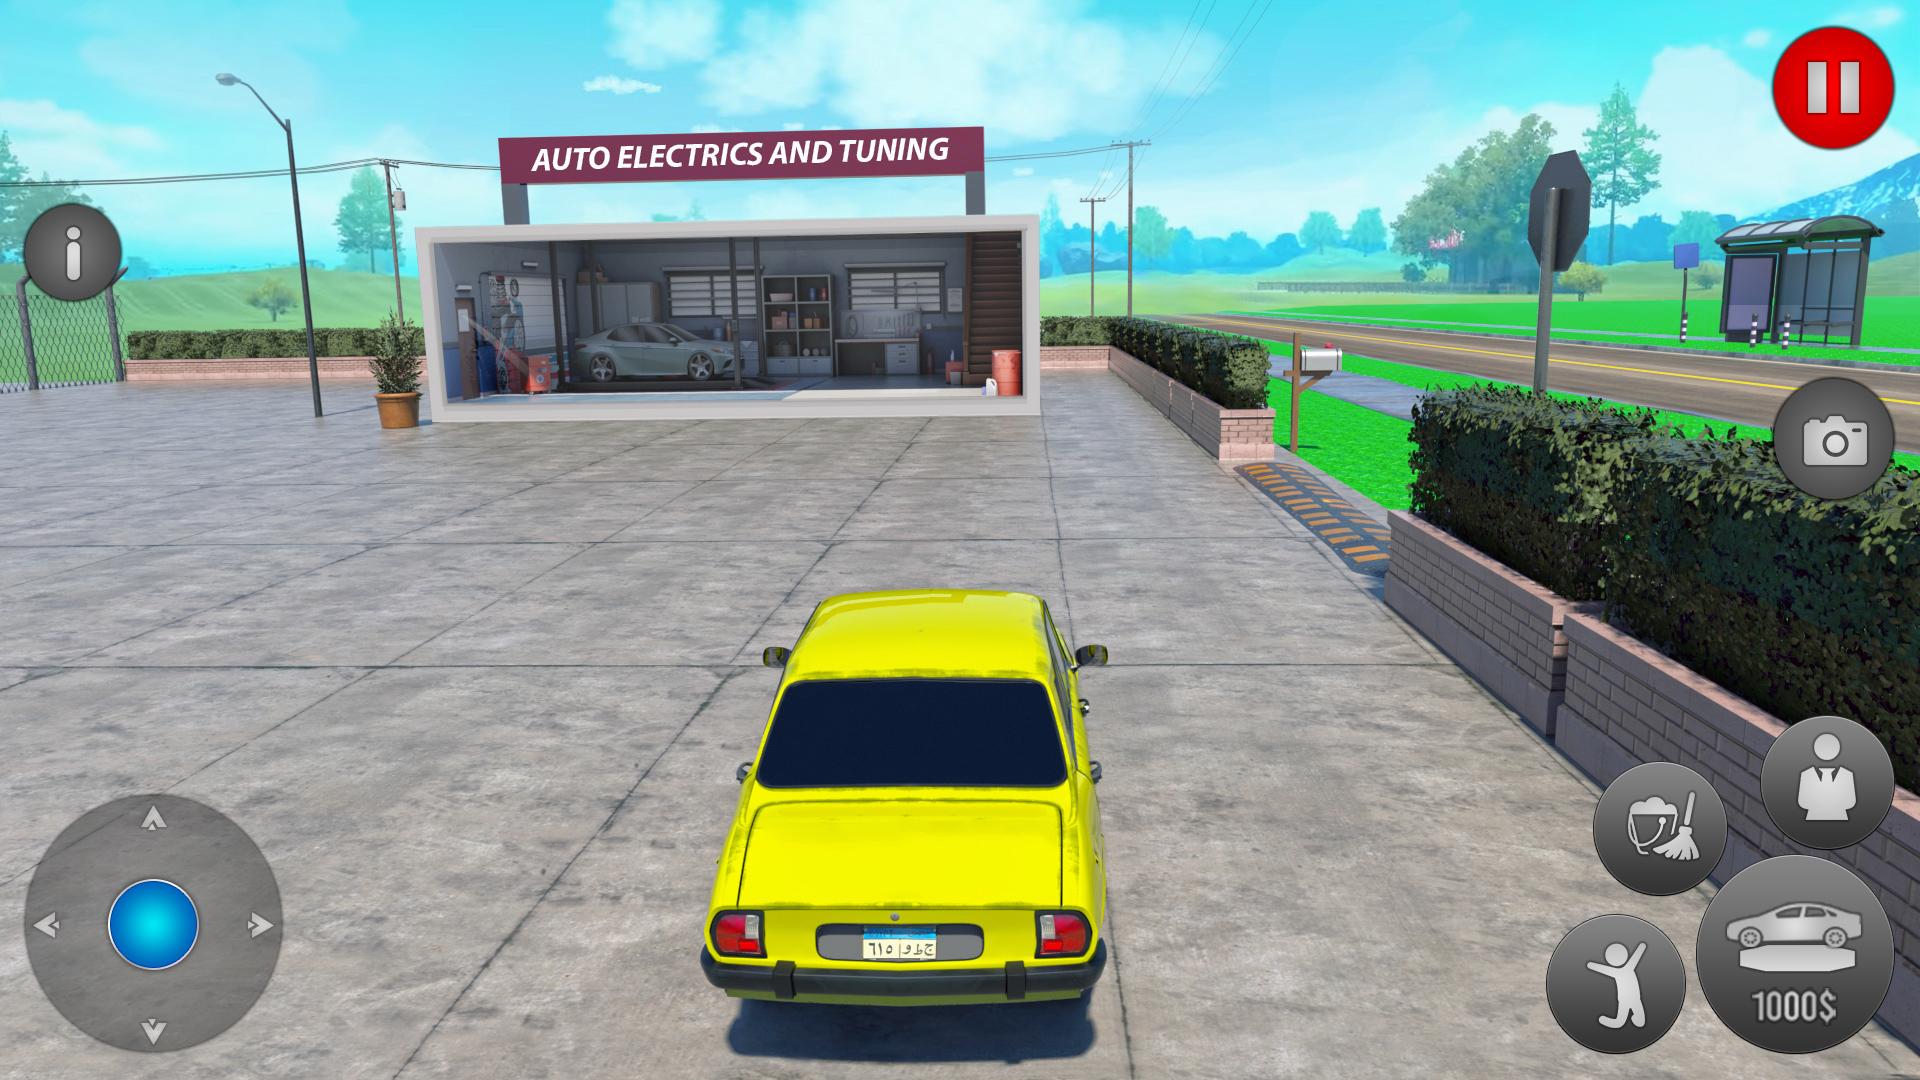 Car saler dealership. Симулятор продавца. Car dealership Simulator.